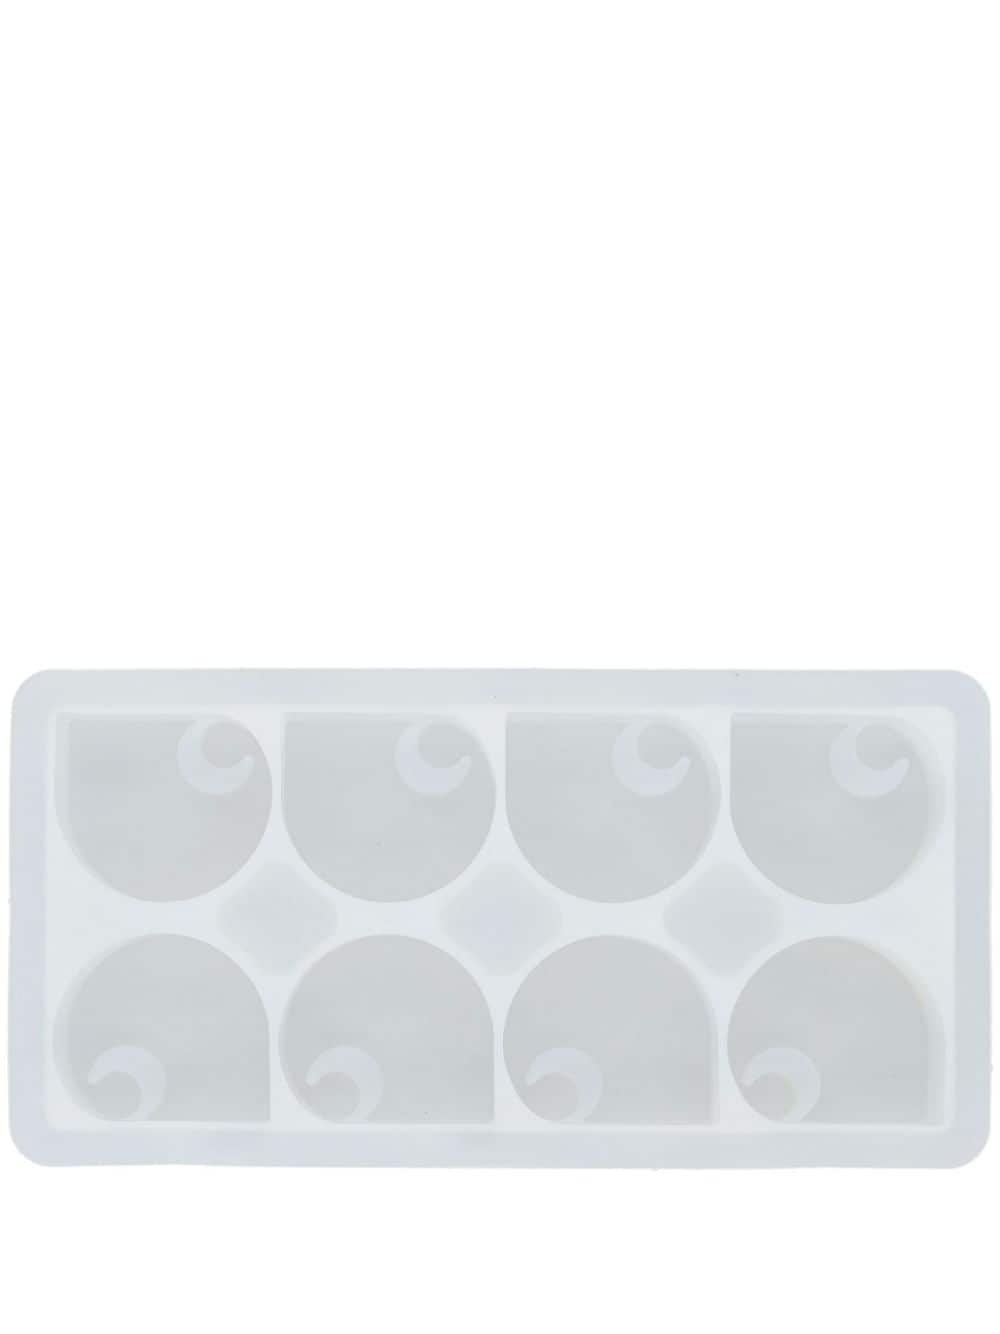 Carhartt WIP C-Logo ice cube tray - White von Carhartt WIP